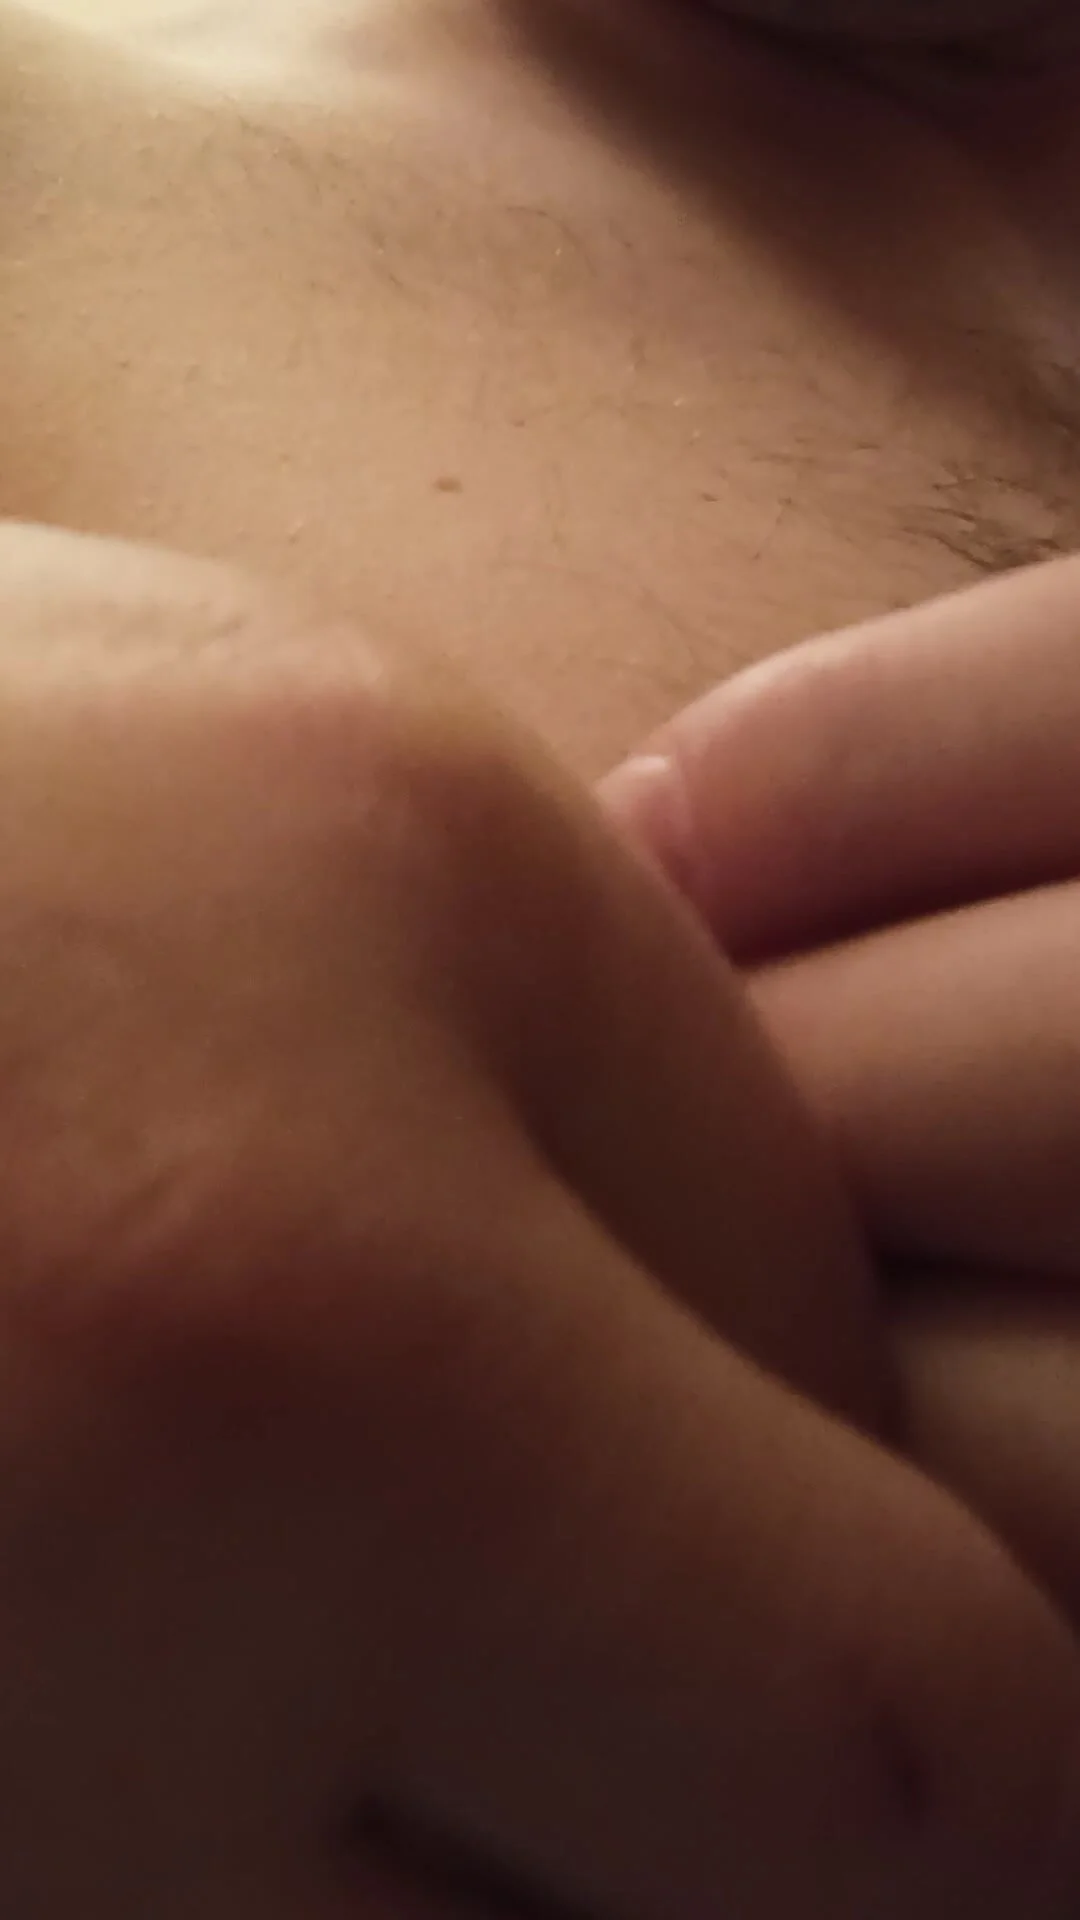 Nipplevideo S - Needle in nipple - video 2 - ThisVid.com